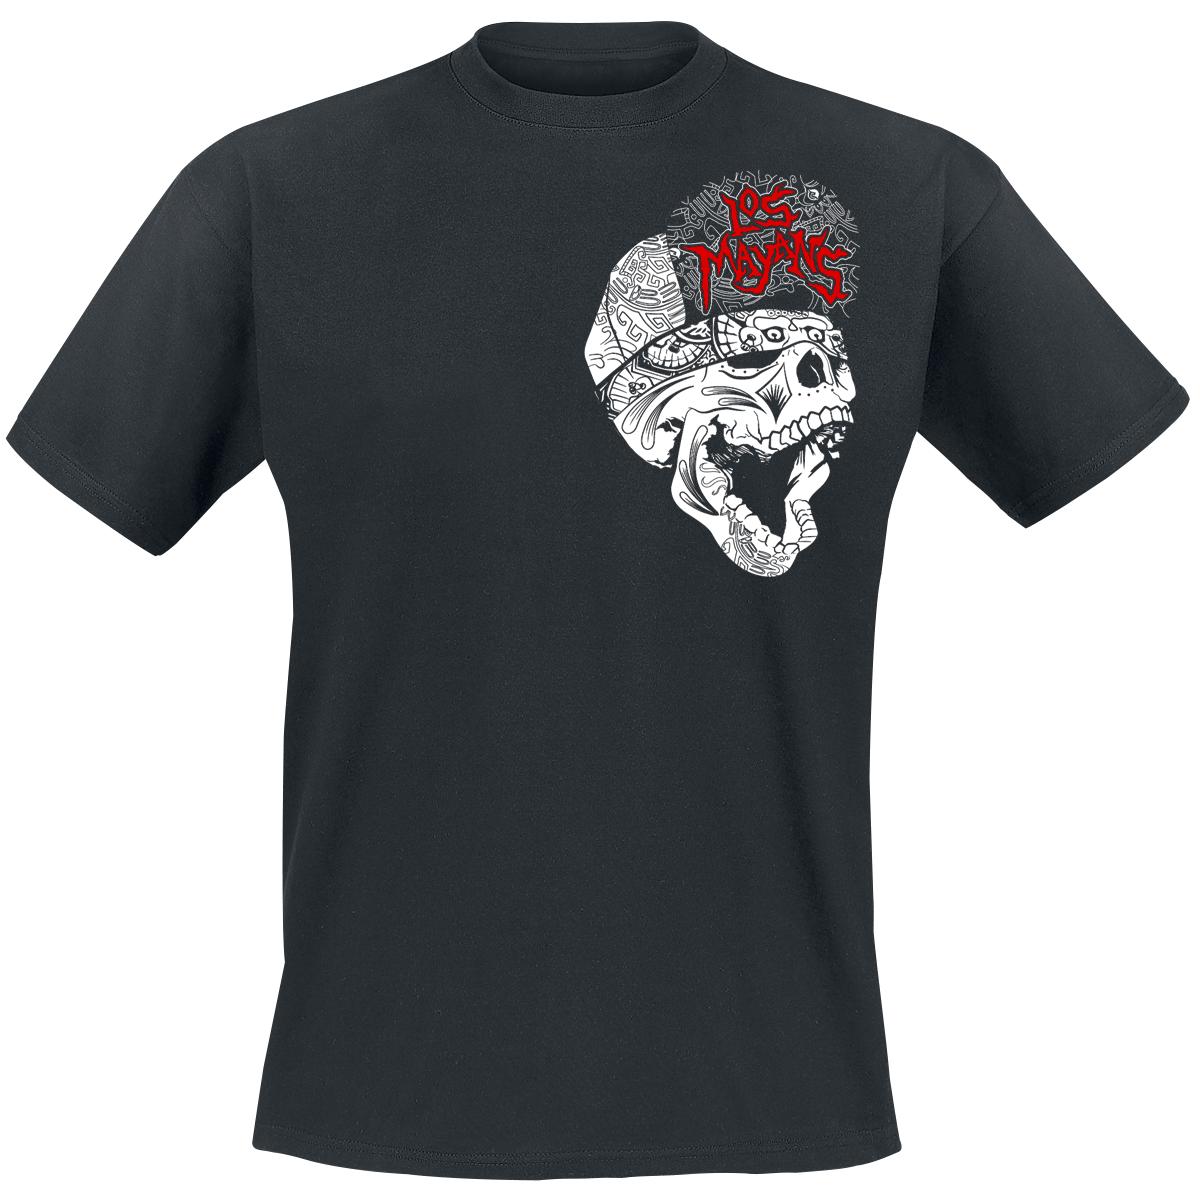 Los Mayans T-shirt Design front